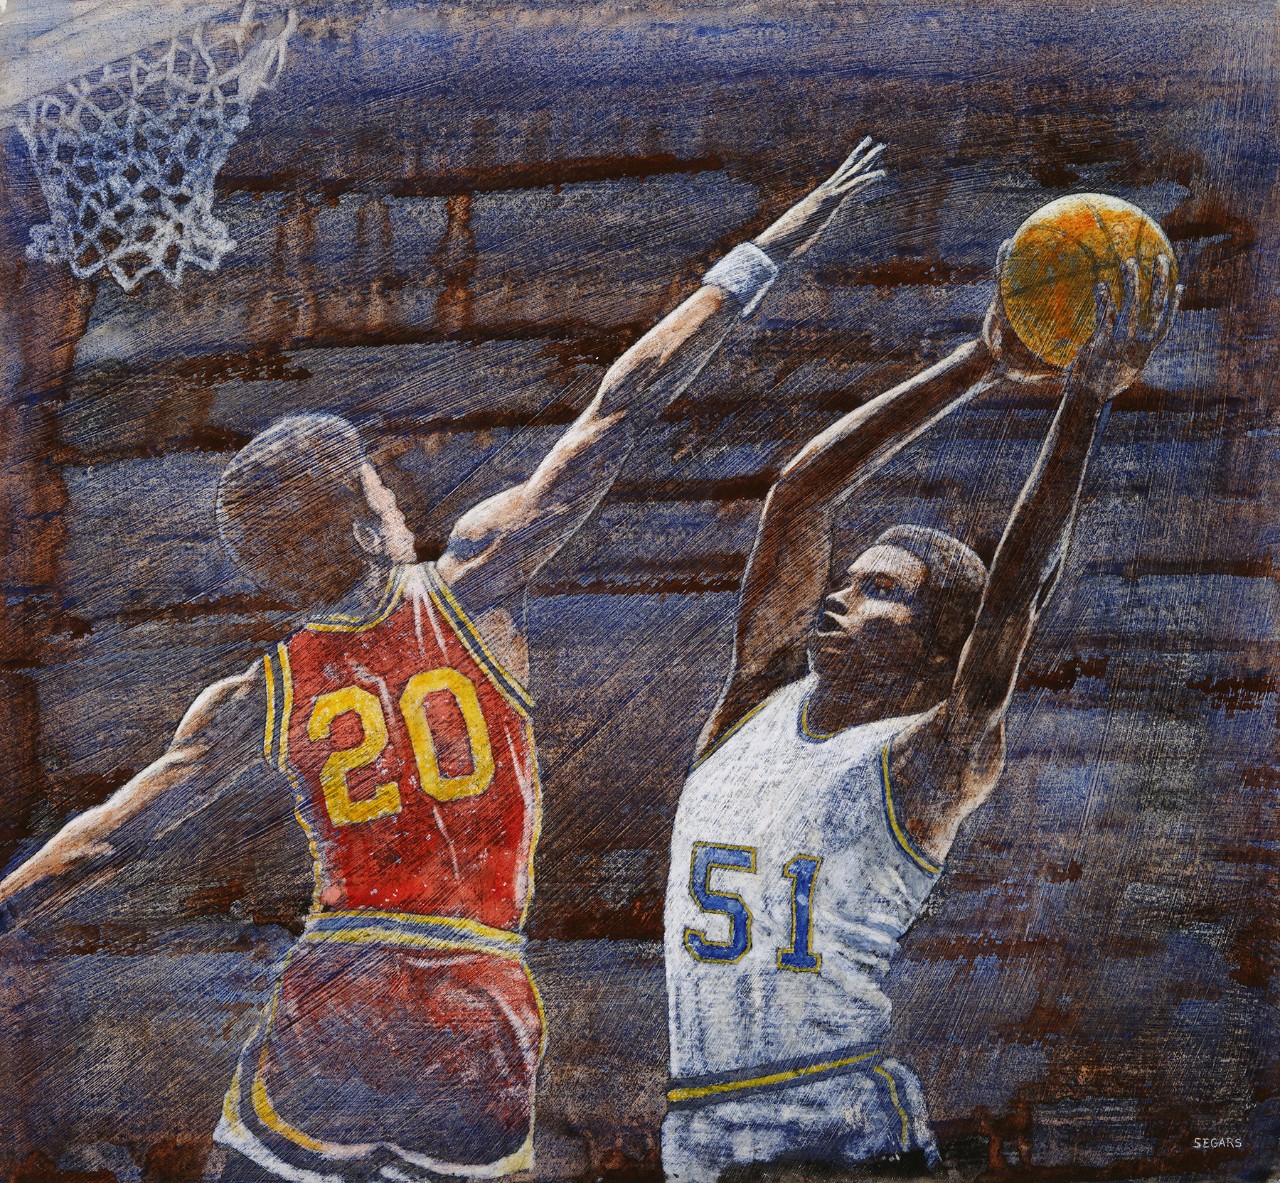 Two African American men playing basketball